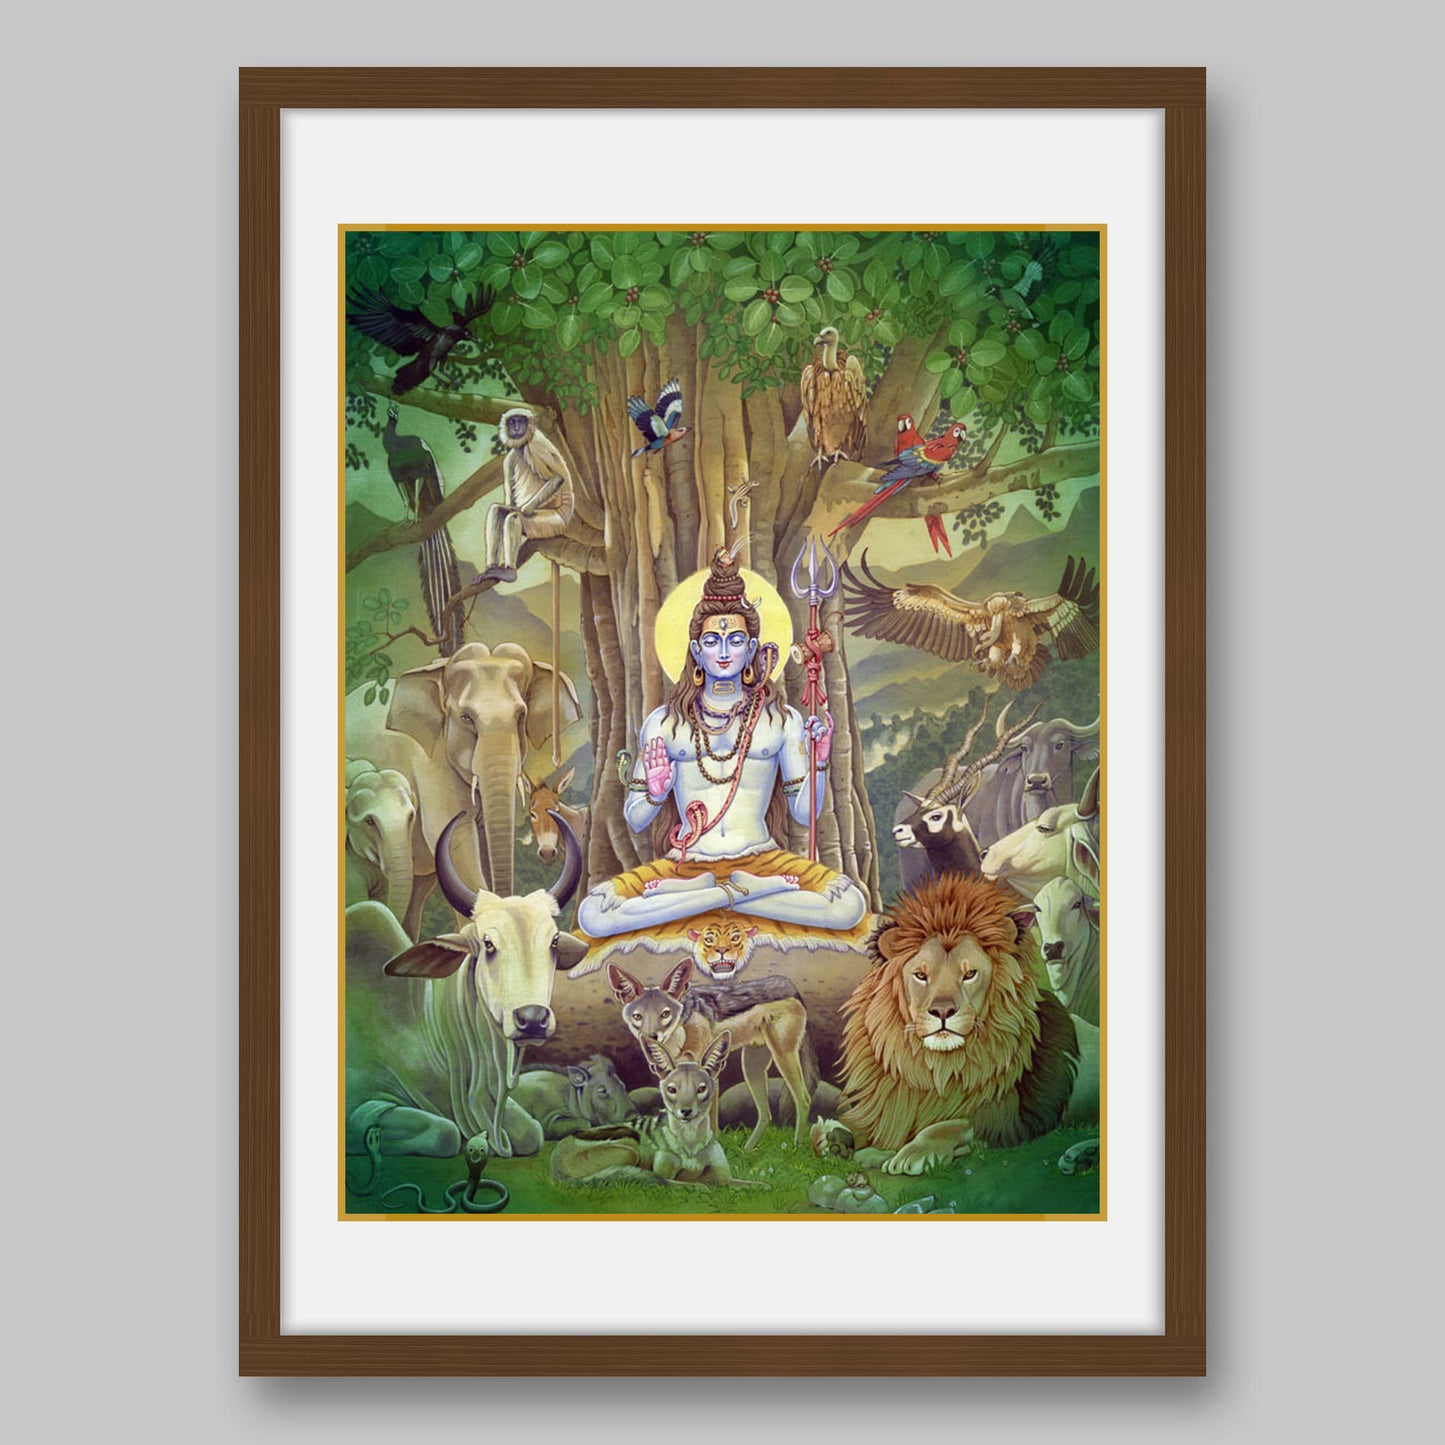 Shiva – High Quality Print of Artwork by Pieter Weltevrede